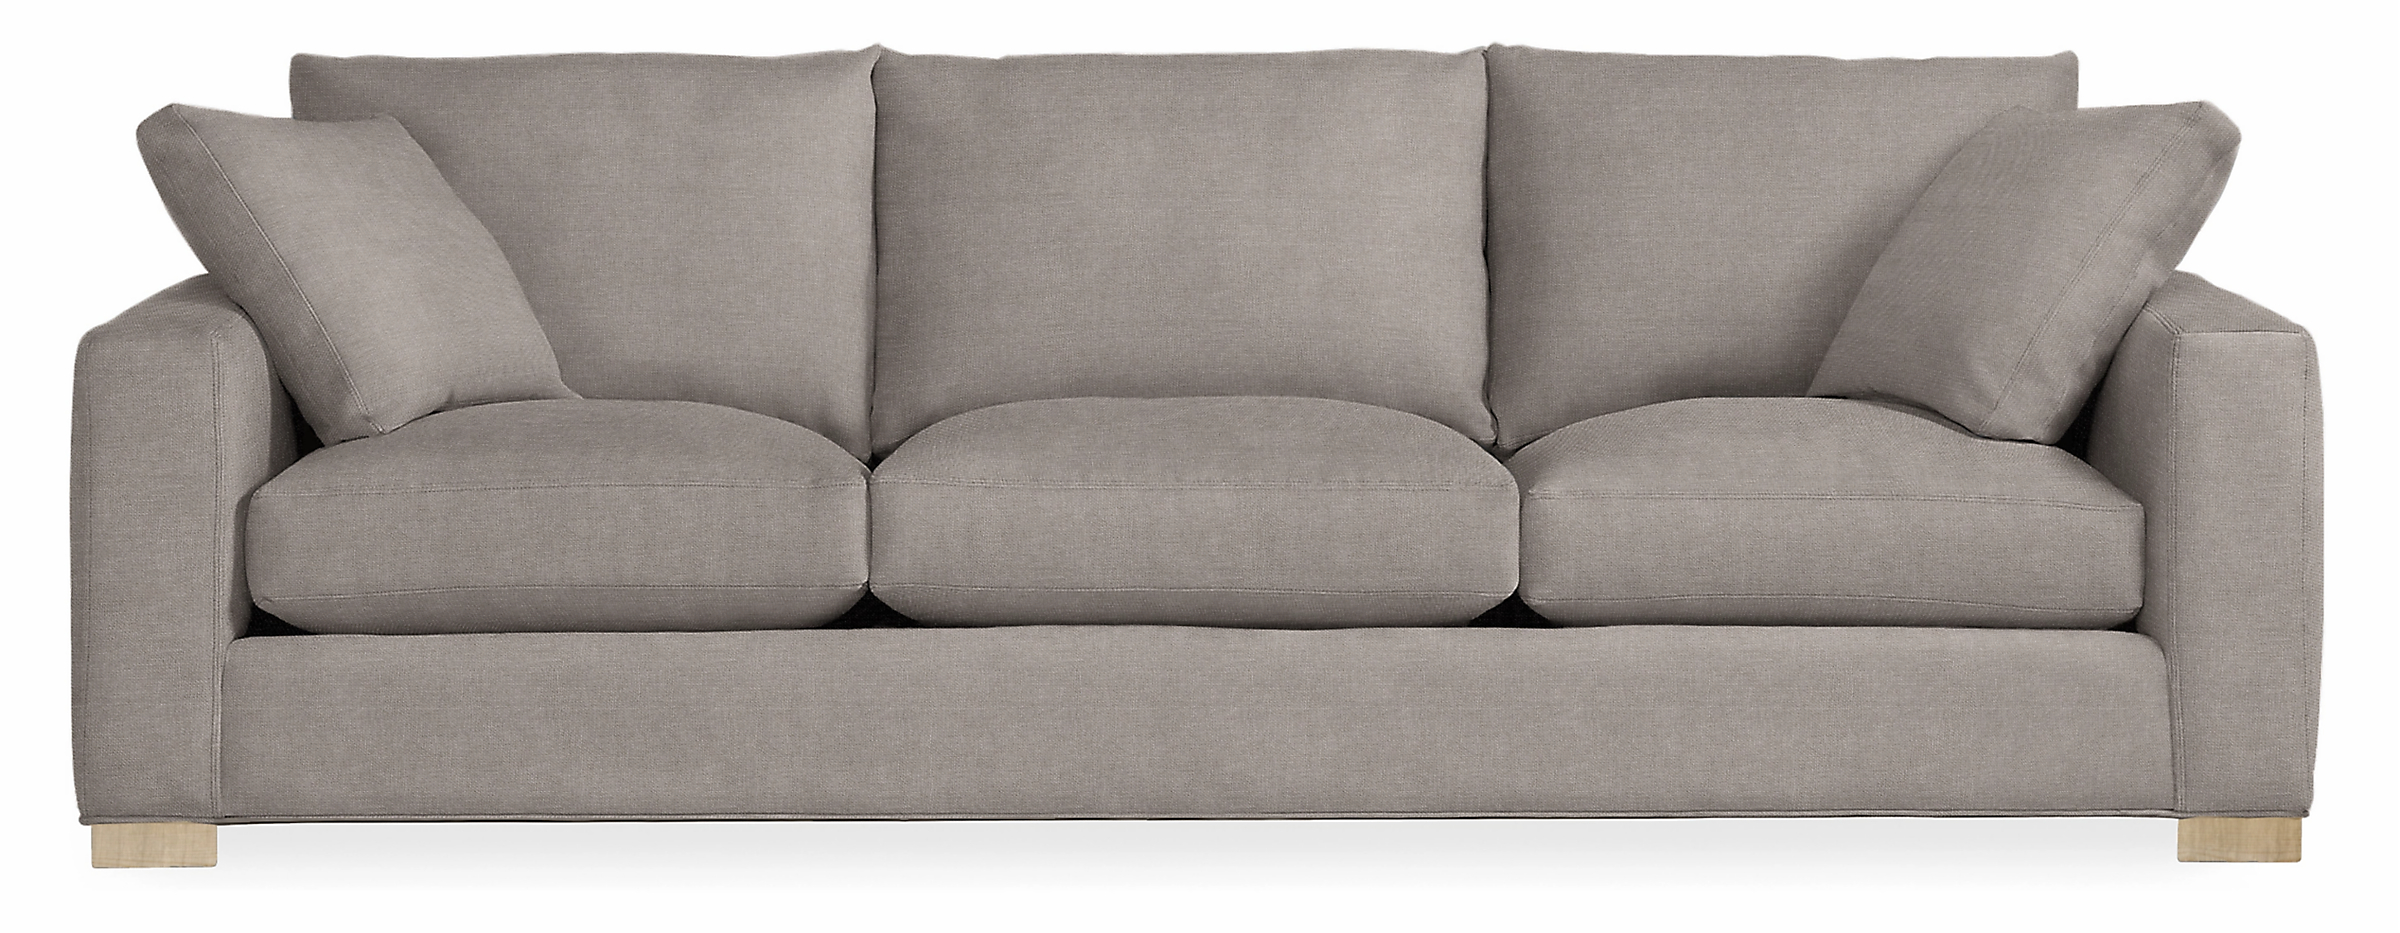 Metro 88" Three-Cushion Sofa in Gino Cement with Ash Legs